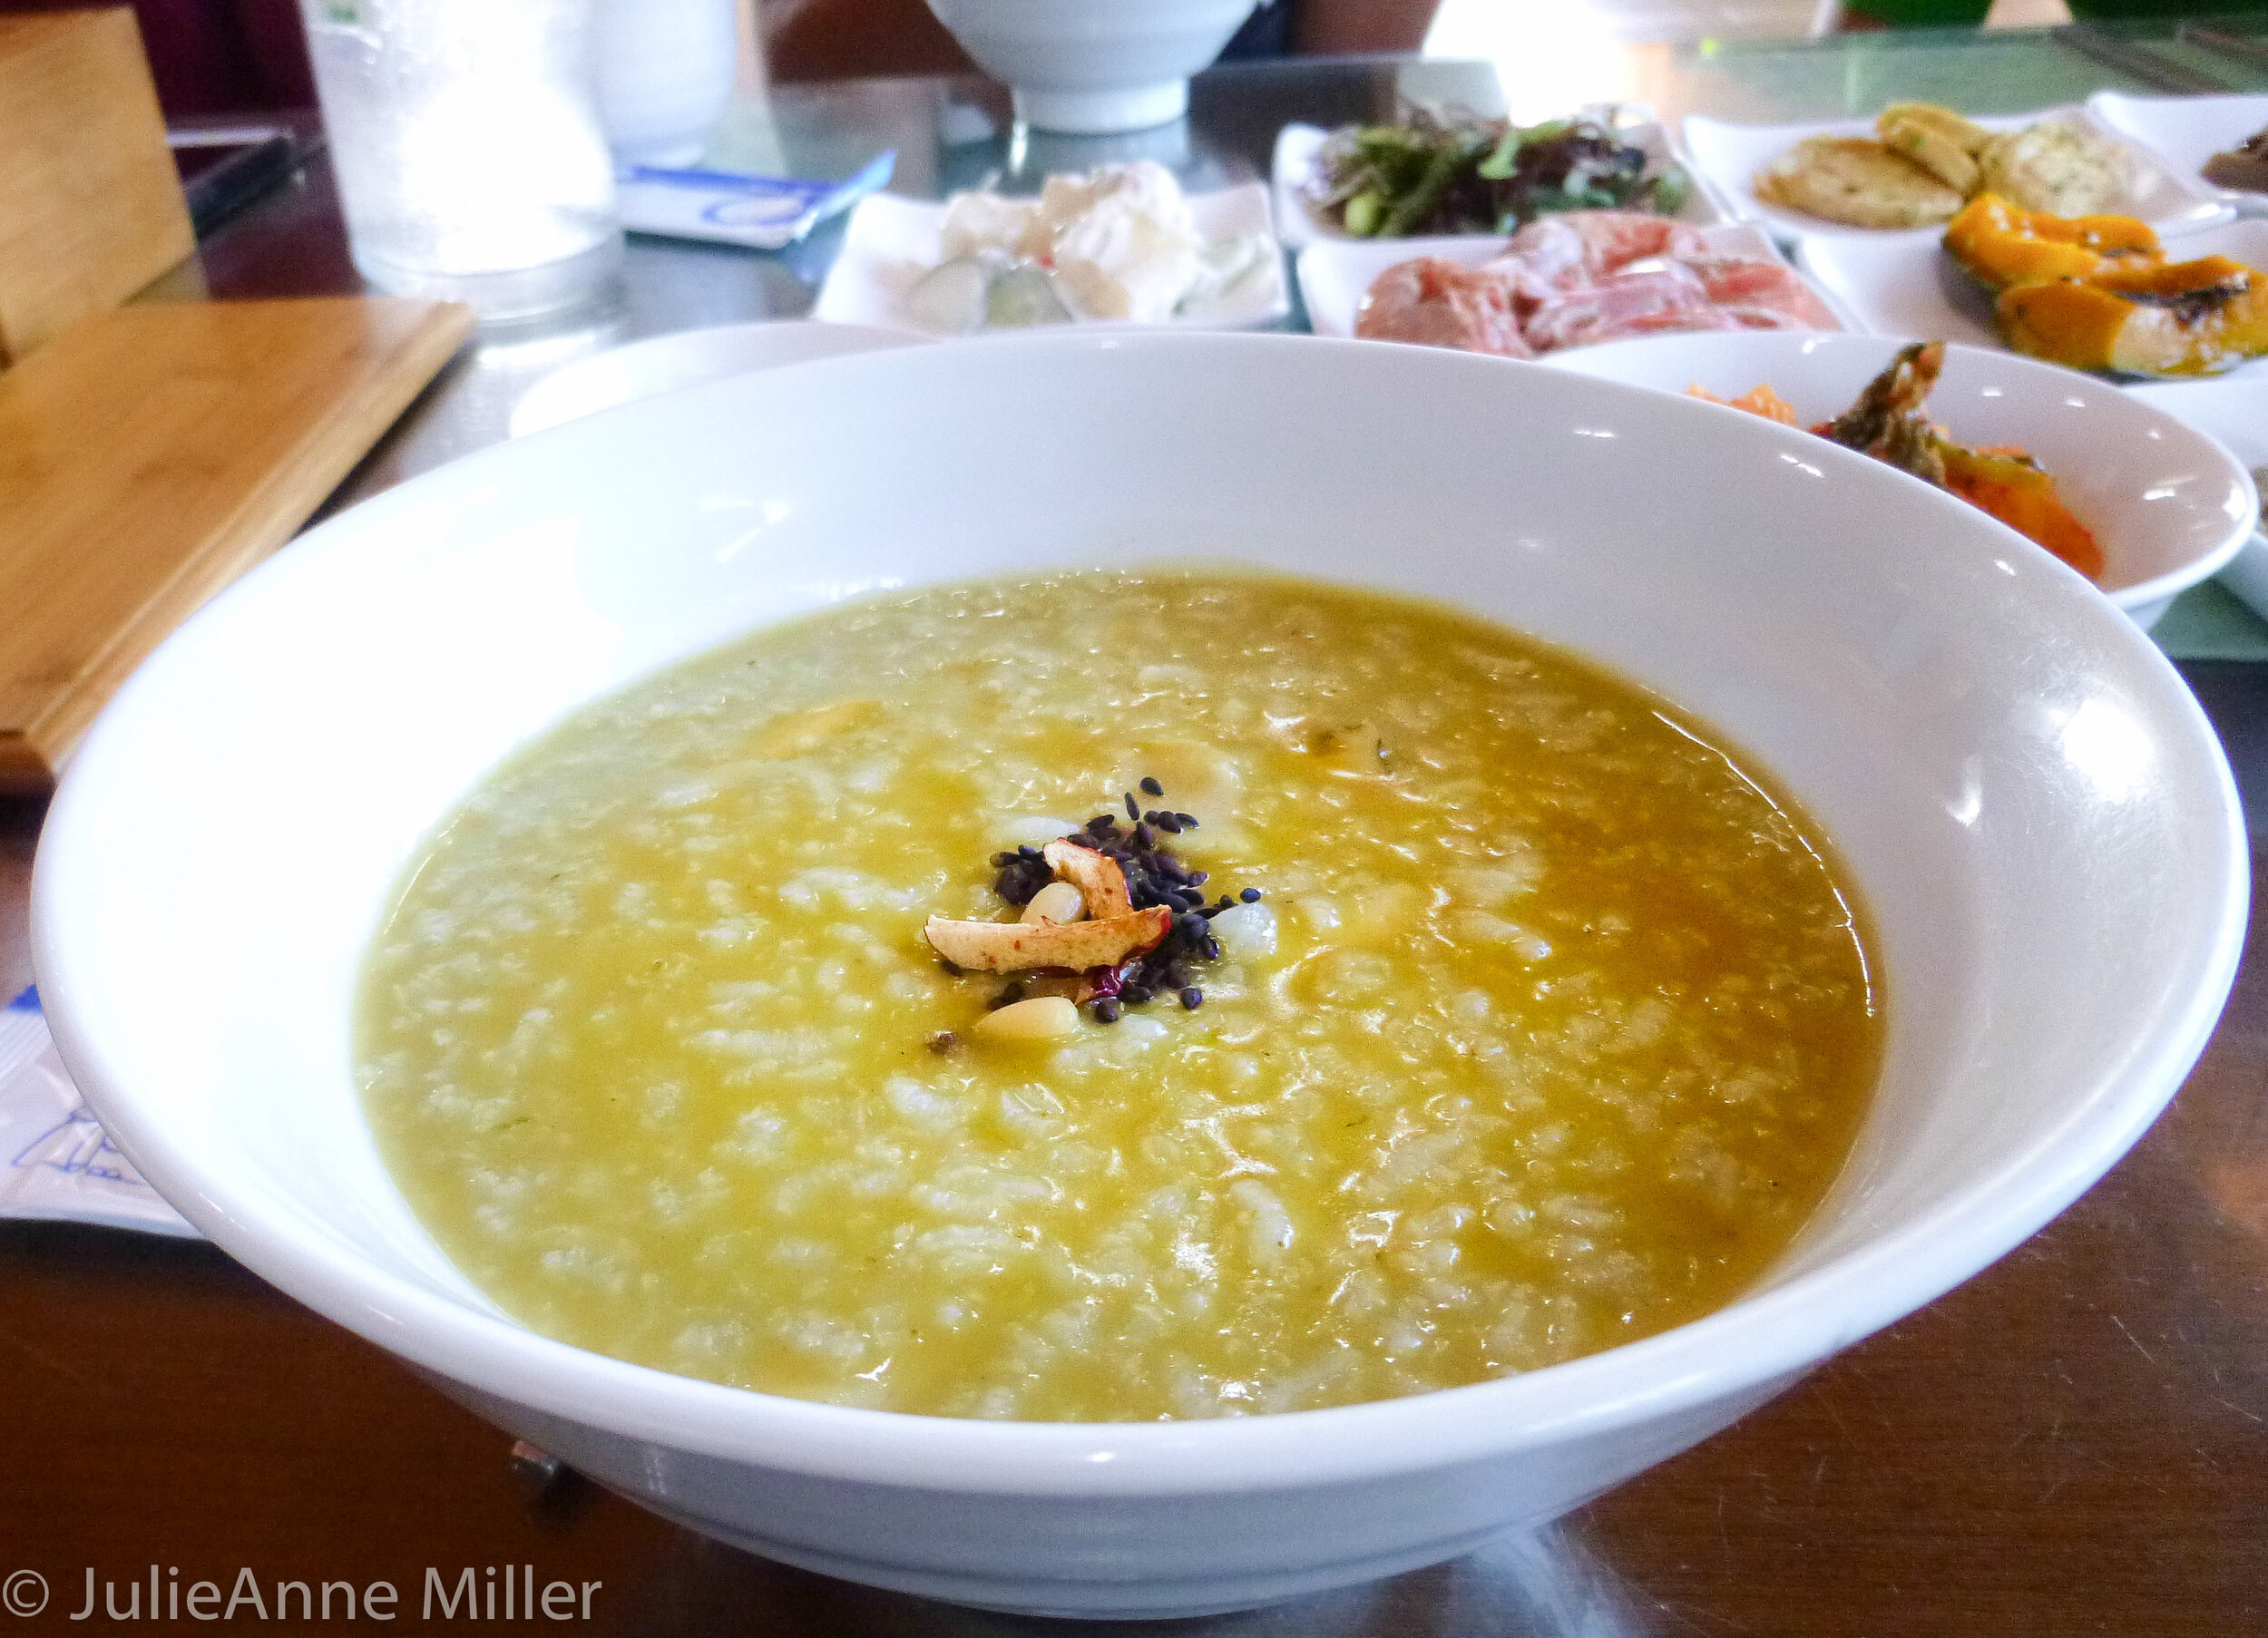 Namhae's famous abalone porridge